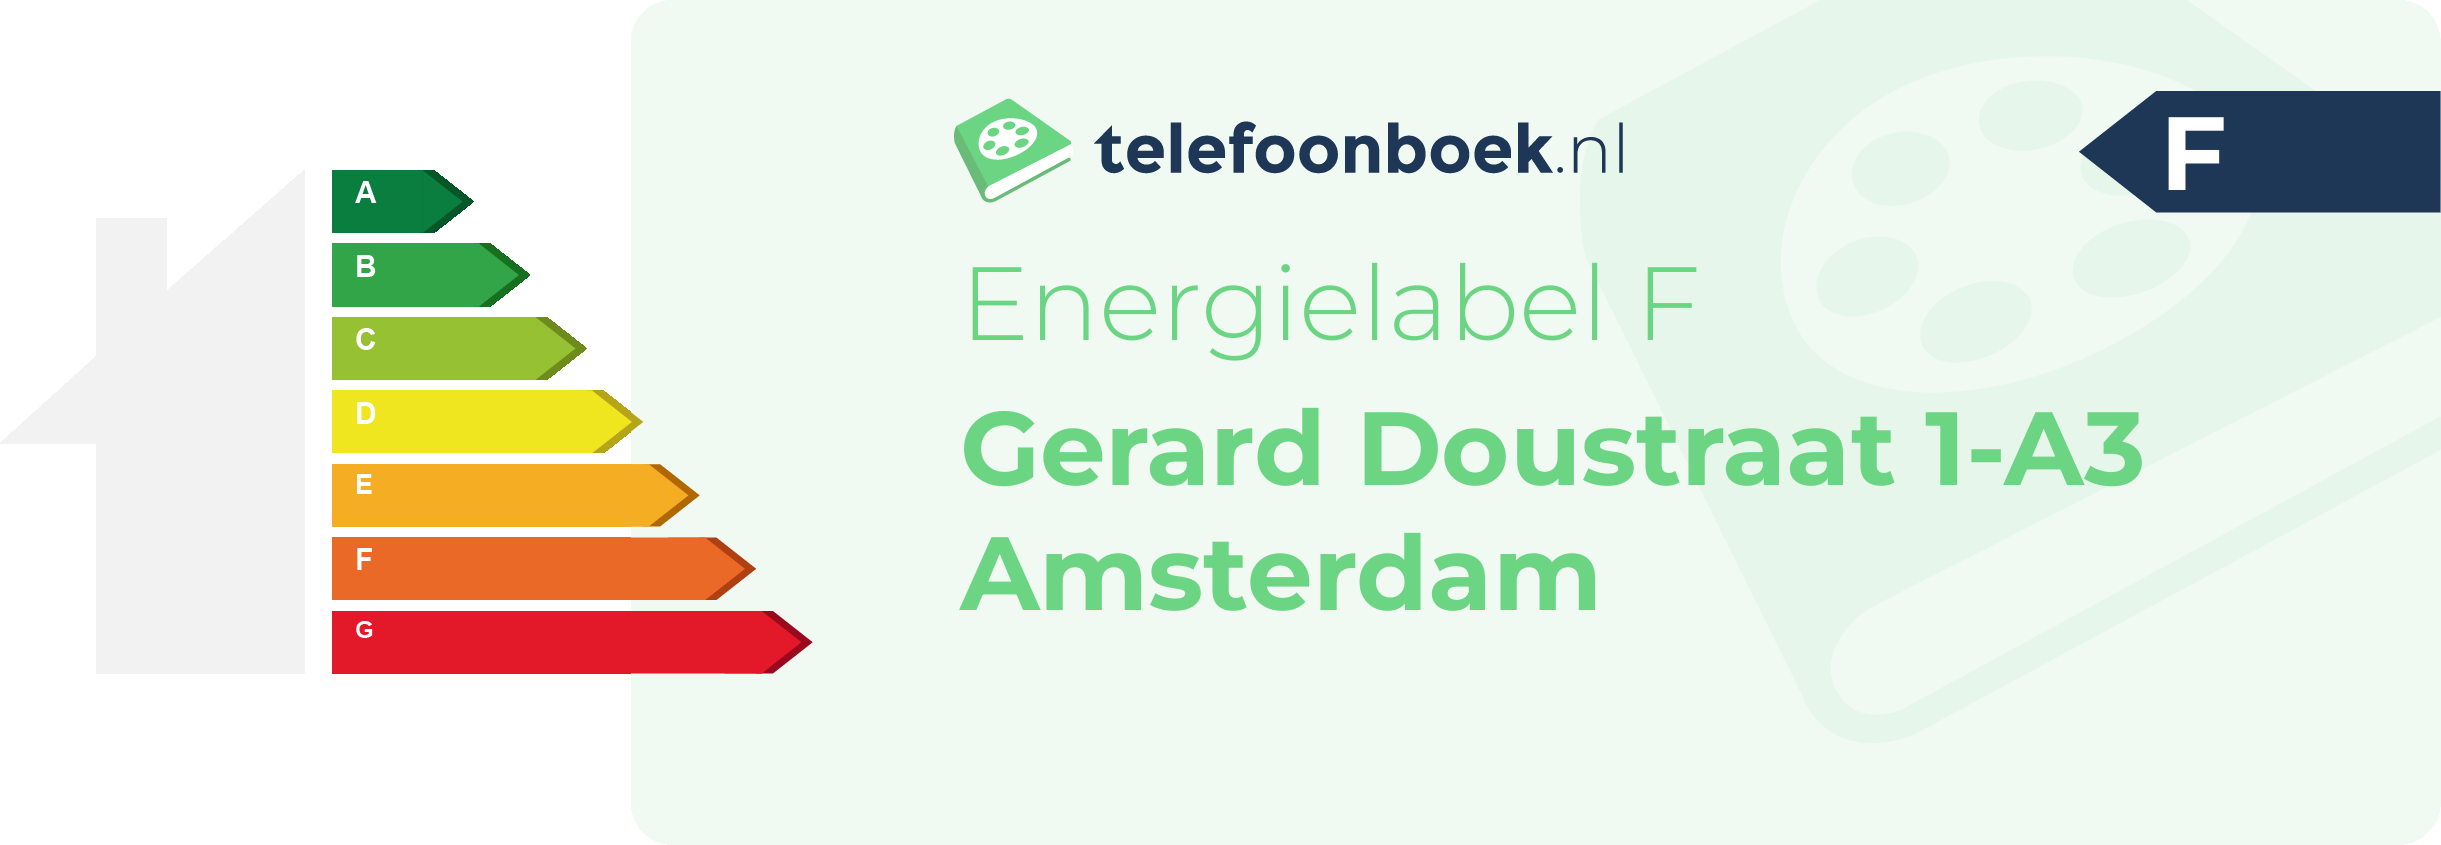 Energielabel Gerard Doustraat 1-A3 Amsterdam